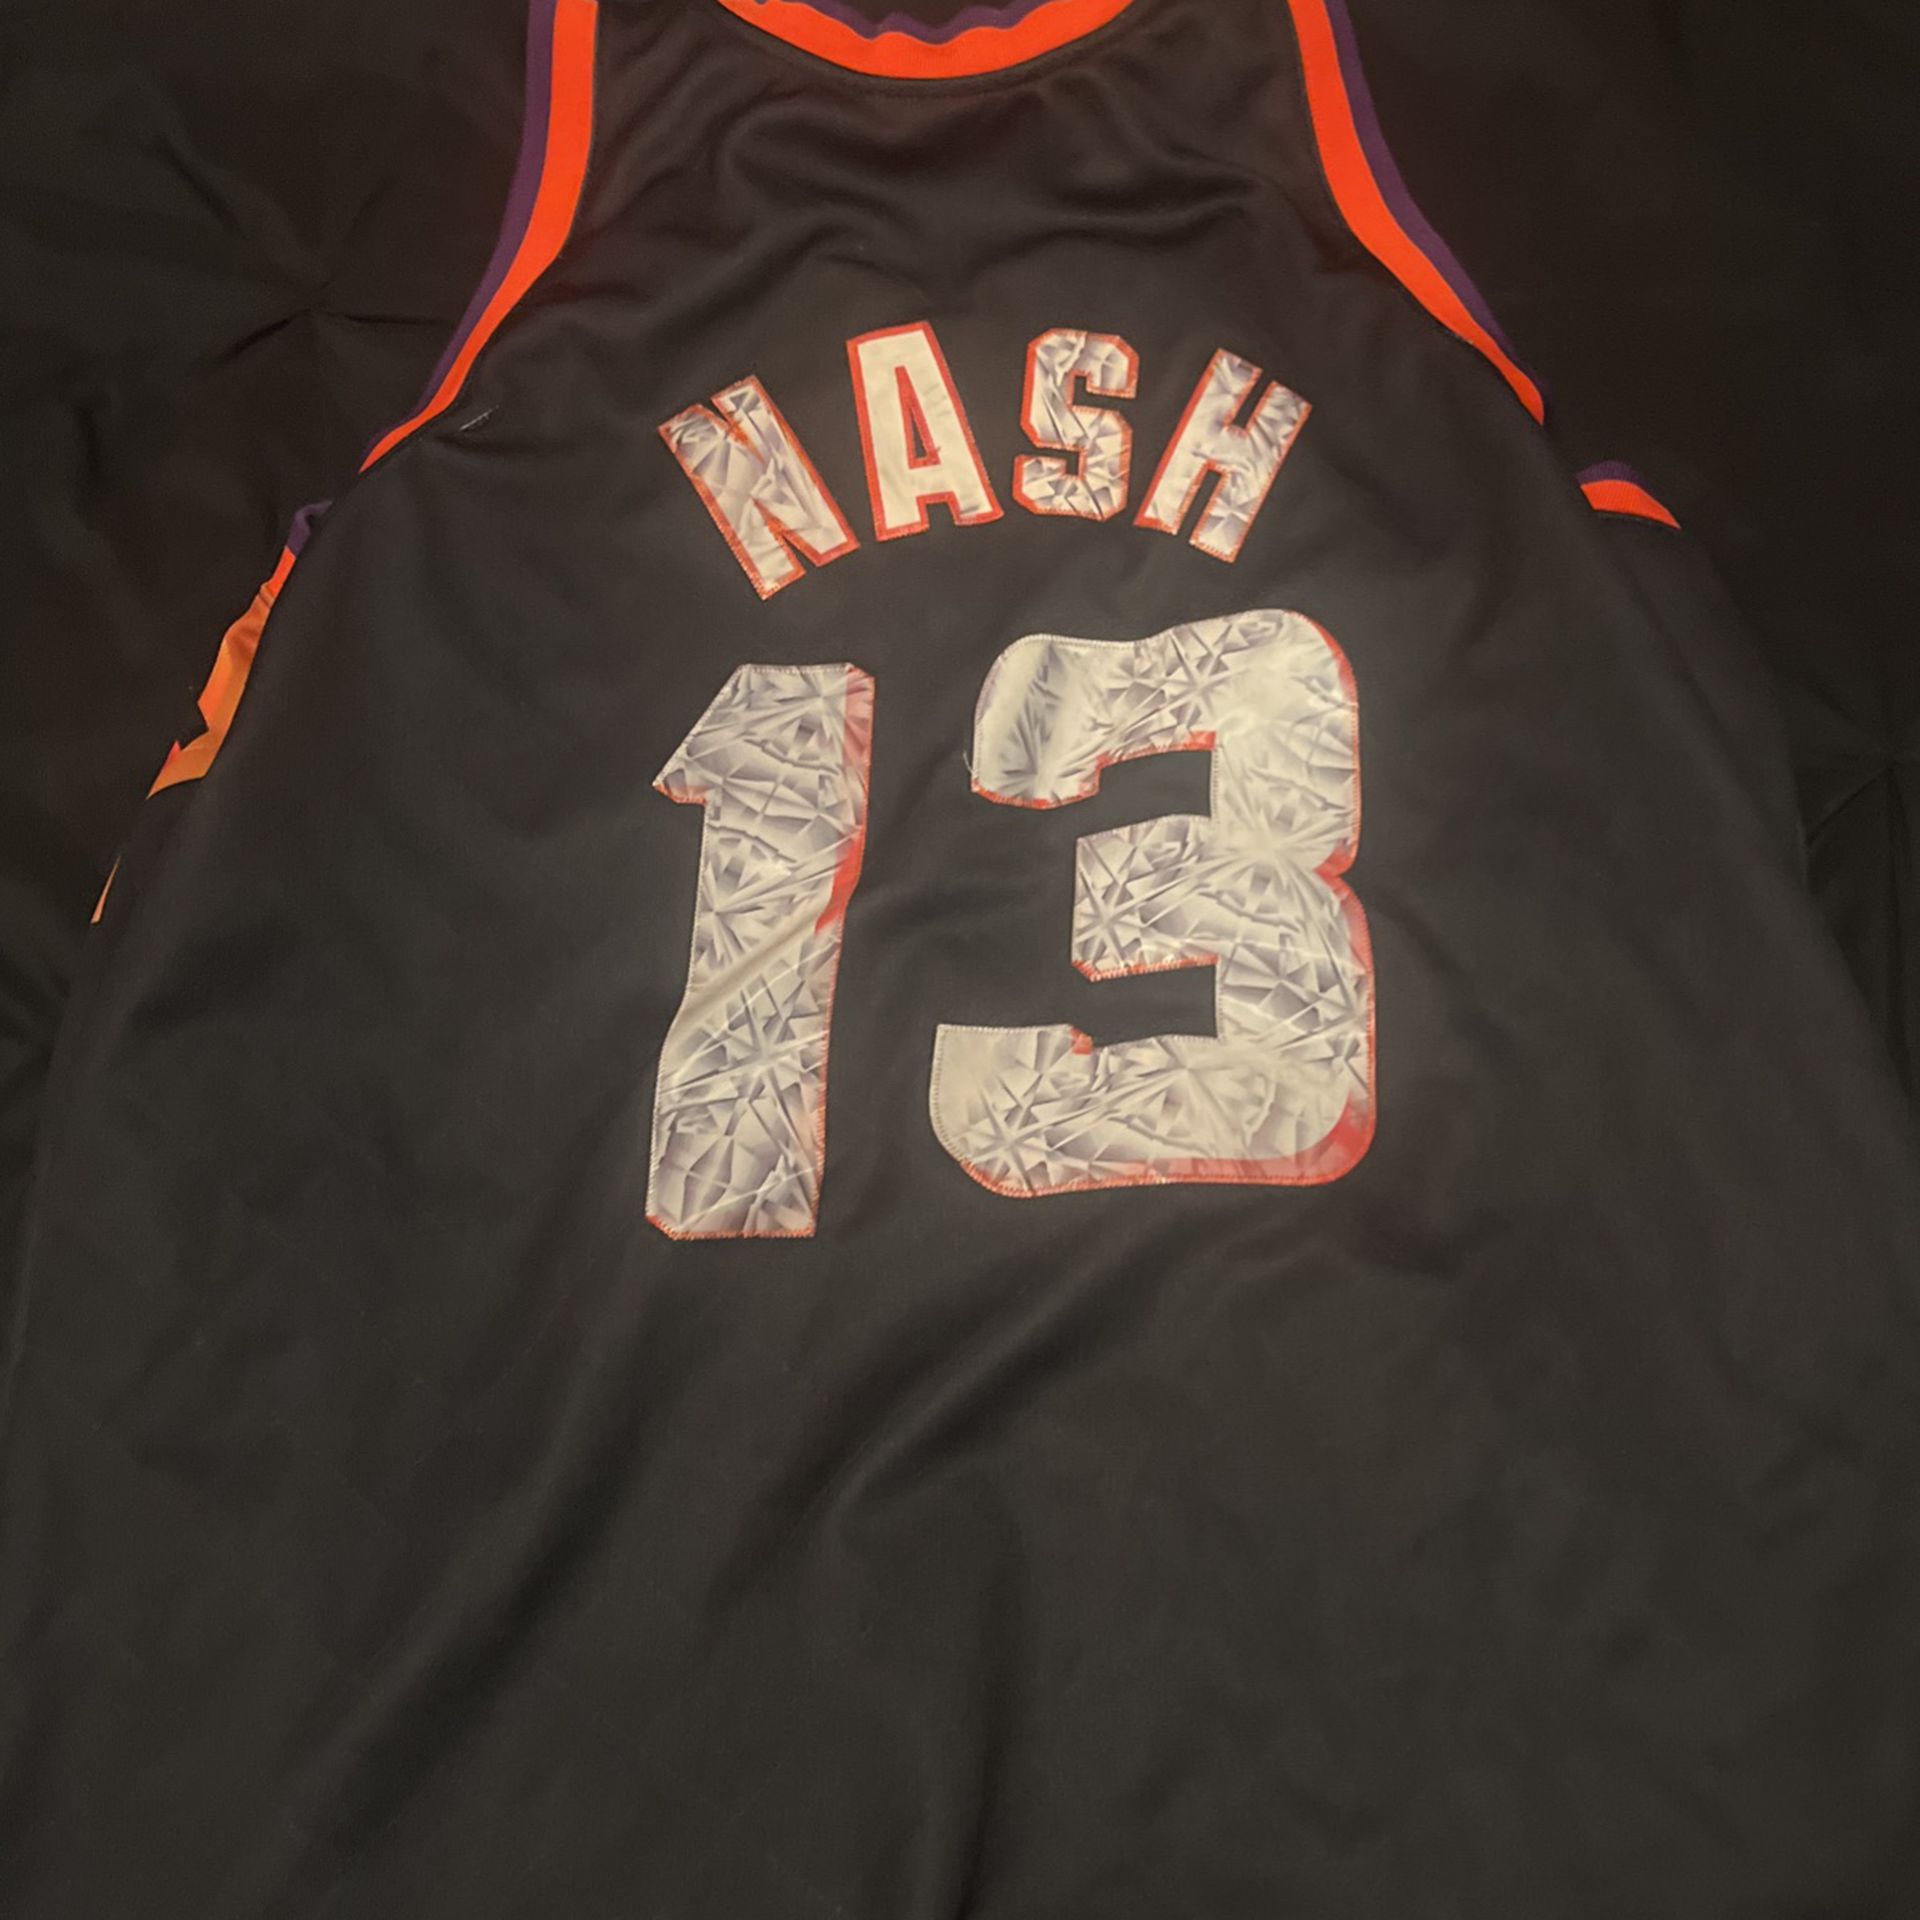 vintage steve nash 1(contact info removed) jersey